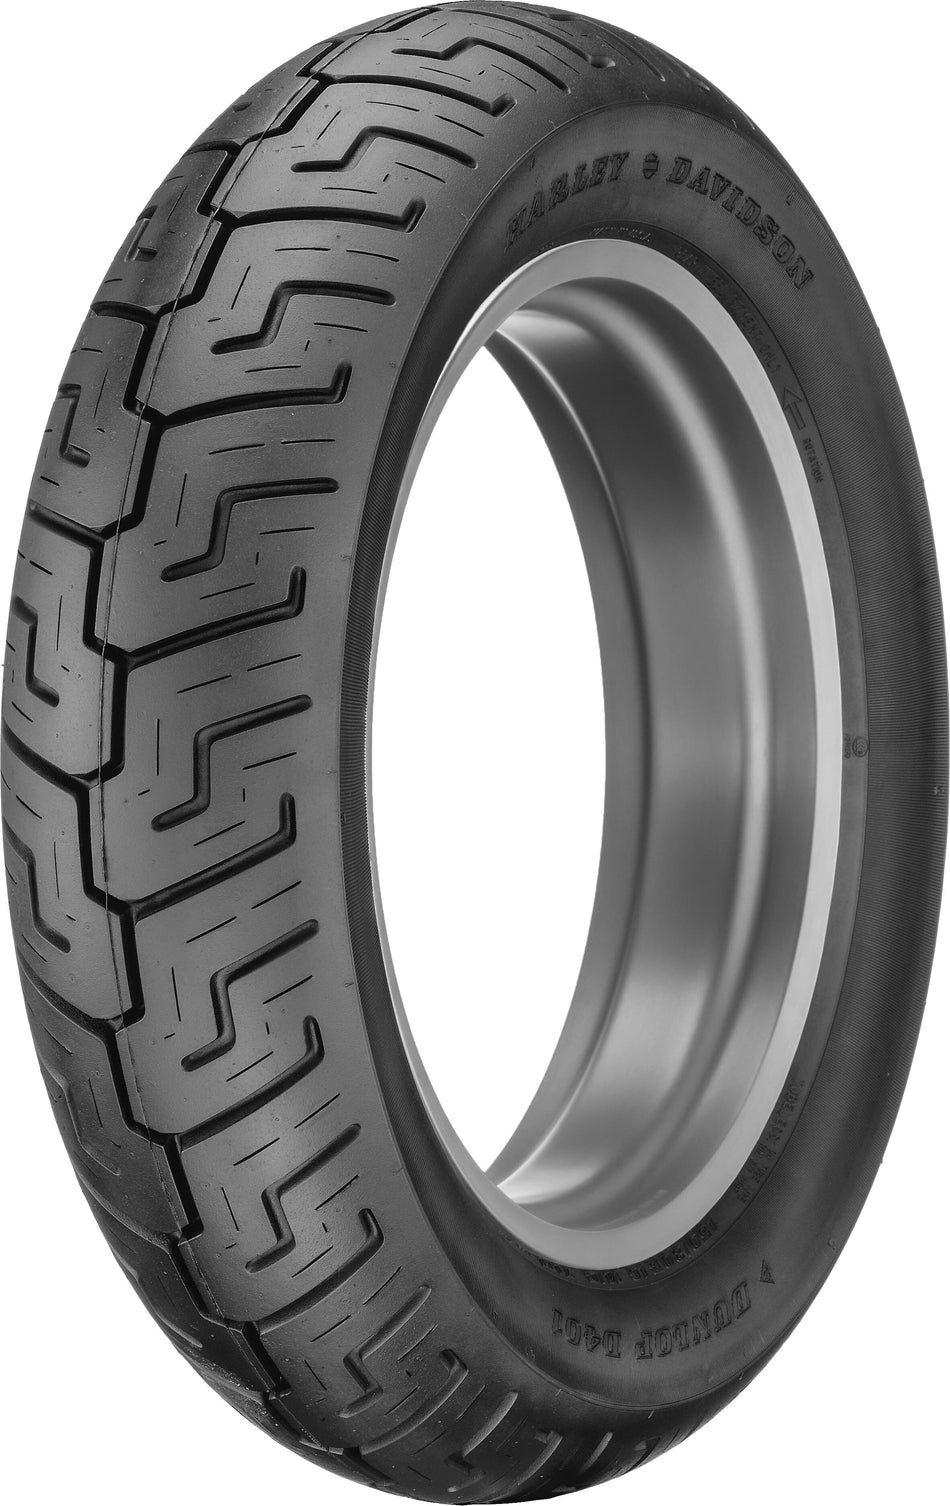 DUNLOP Tire K591 Rear 160/70b-17 73v Tl (Hd) 45146085